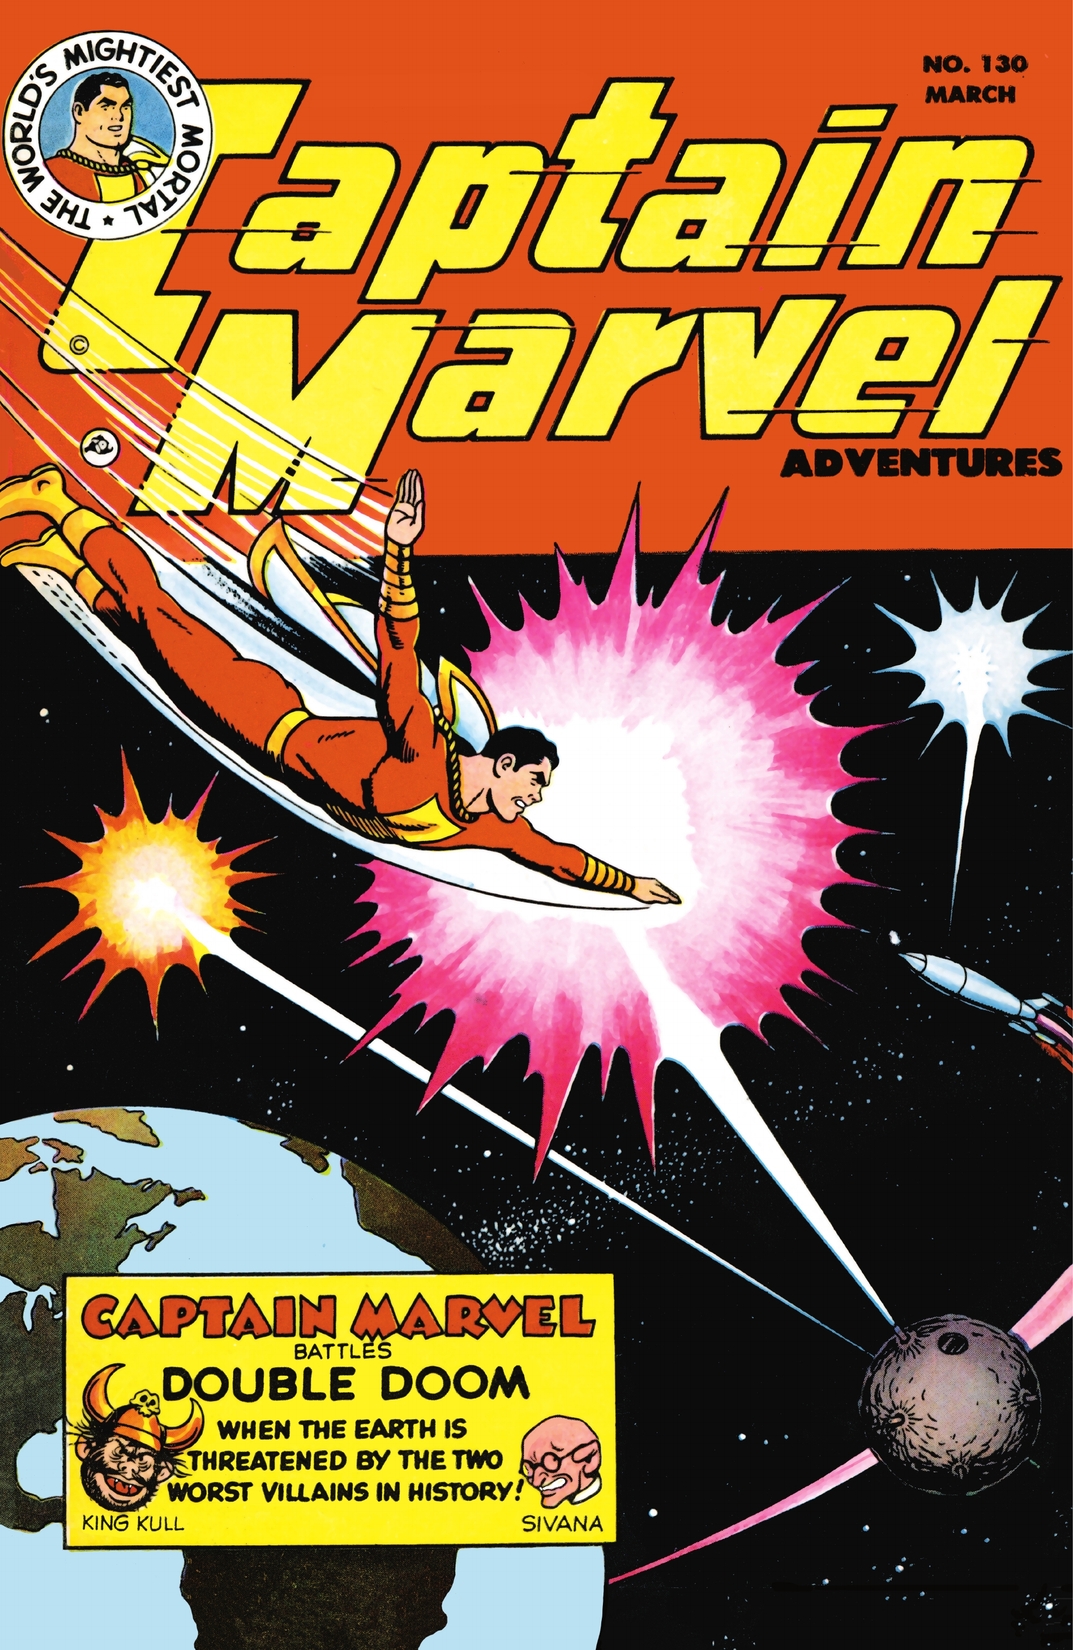 Captain Marvel Adventures #130 preview images